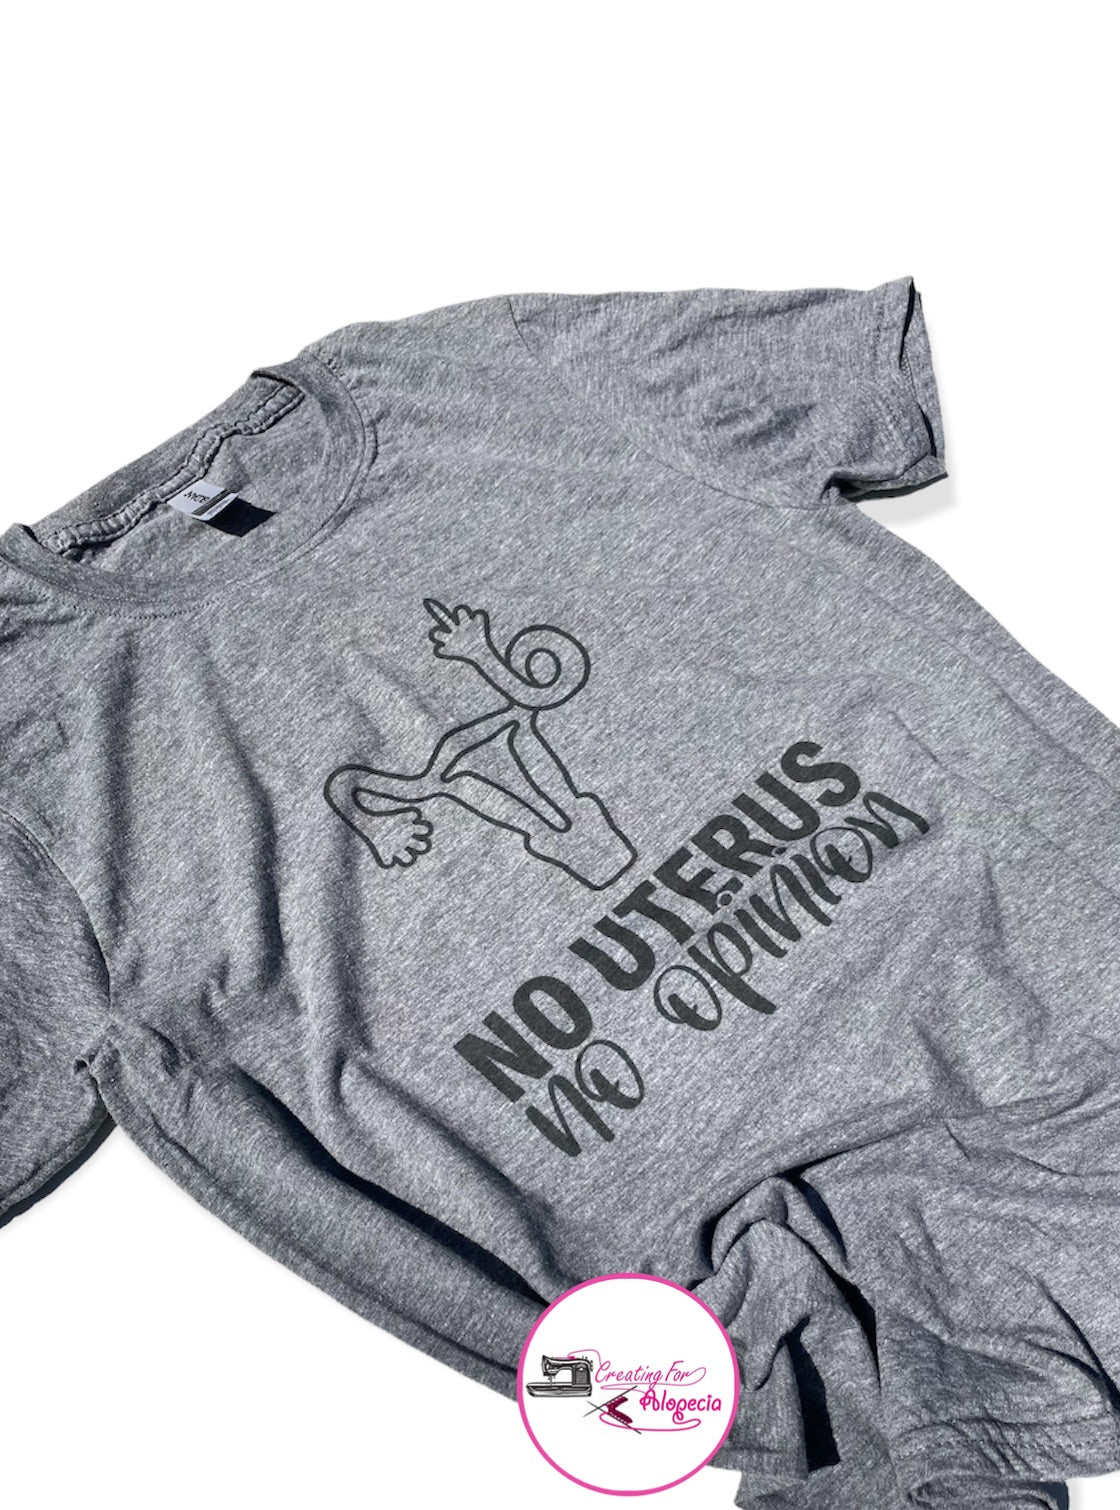 “No uterus, no opinion” Sublimated Shirt